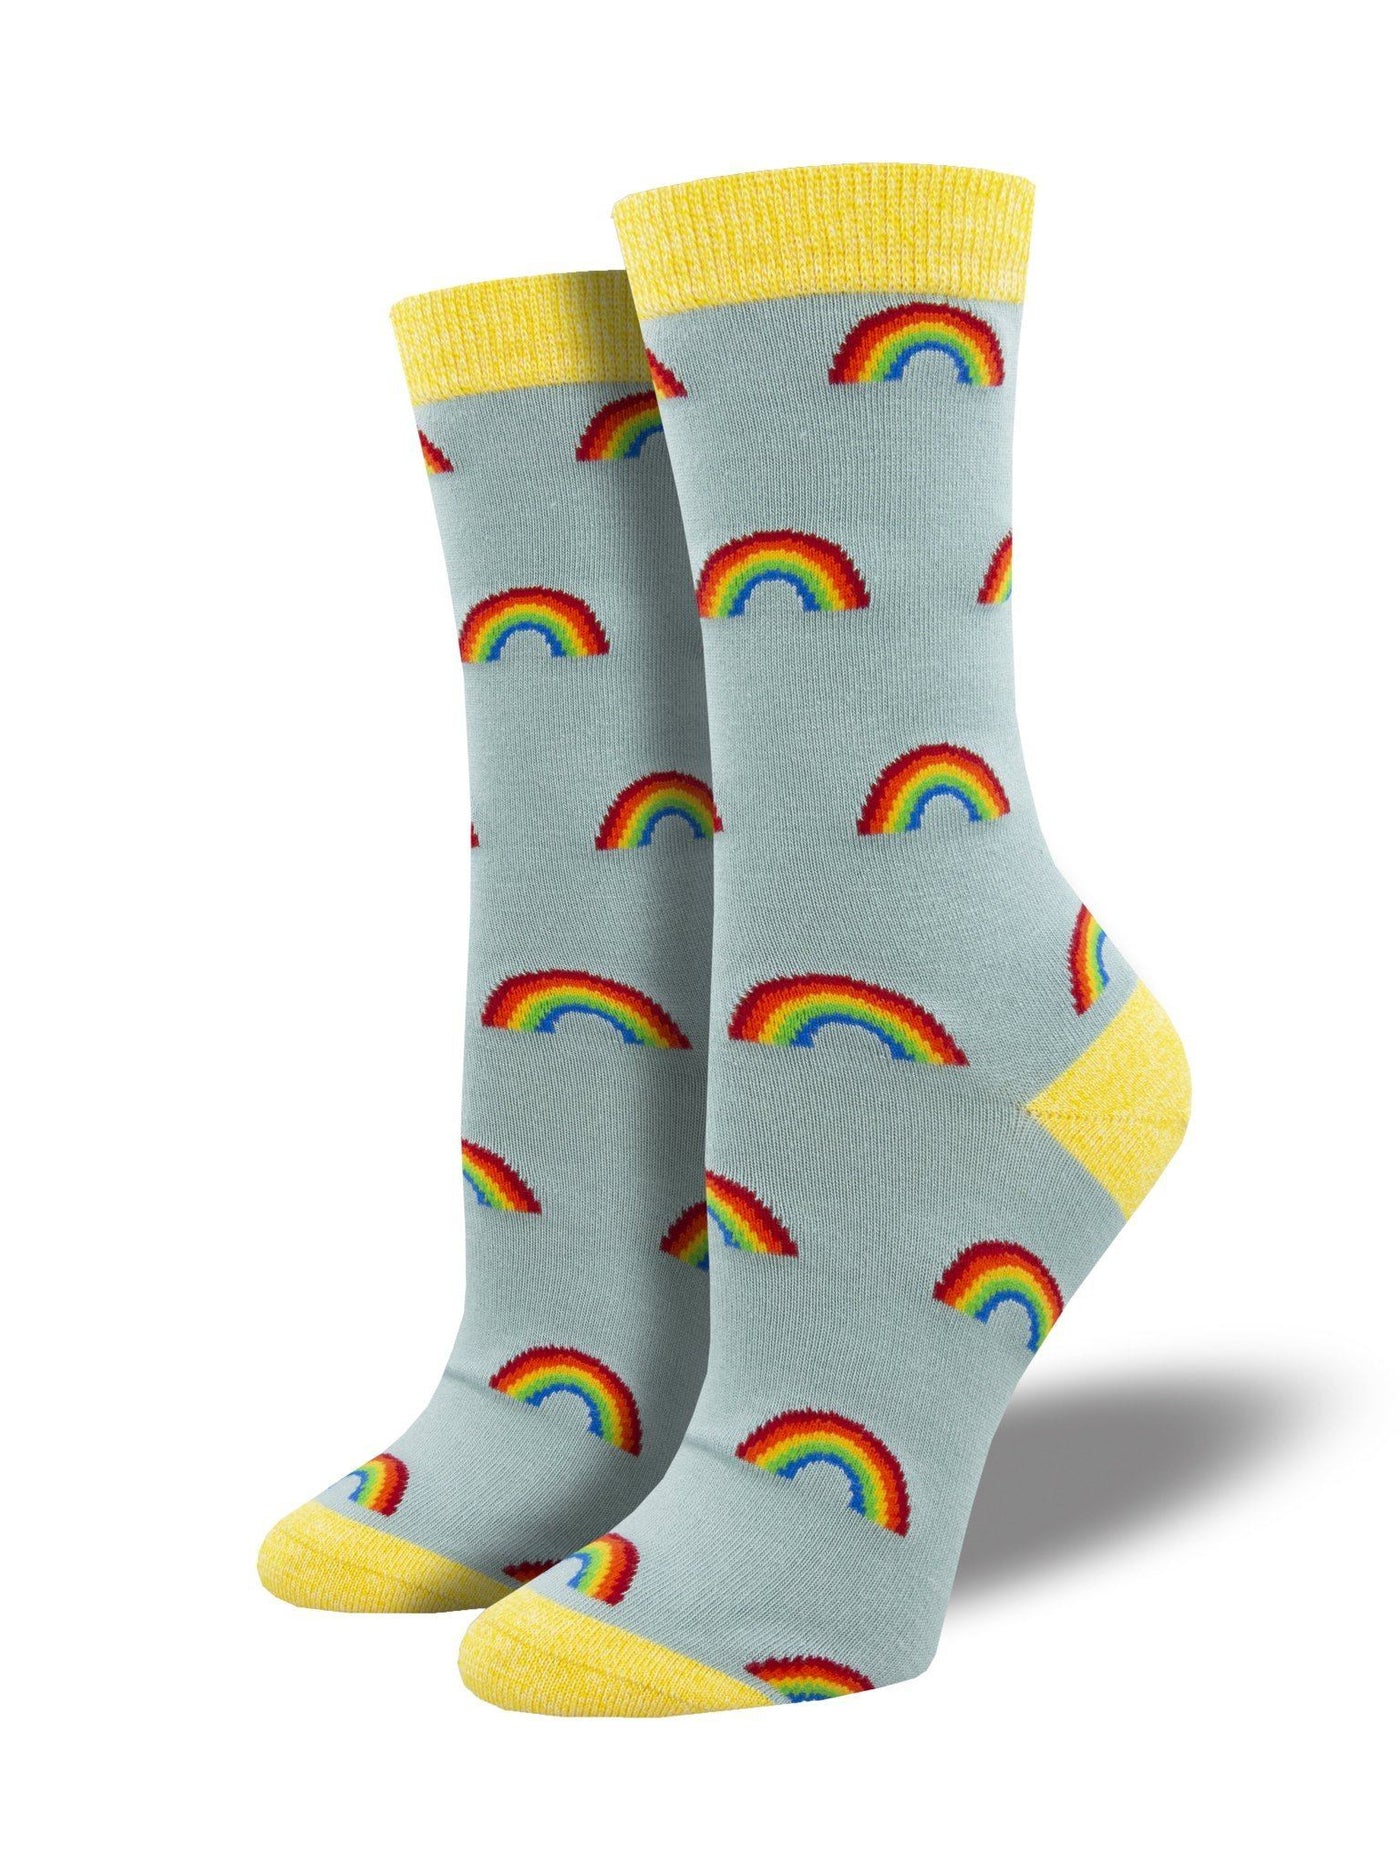 Socksmith - Bamboo "On the Bright Side" Rainbow Crew Socks | Women's - Knock Your Socks Off